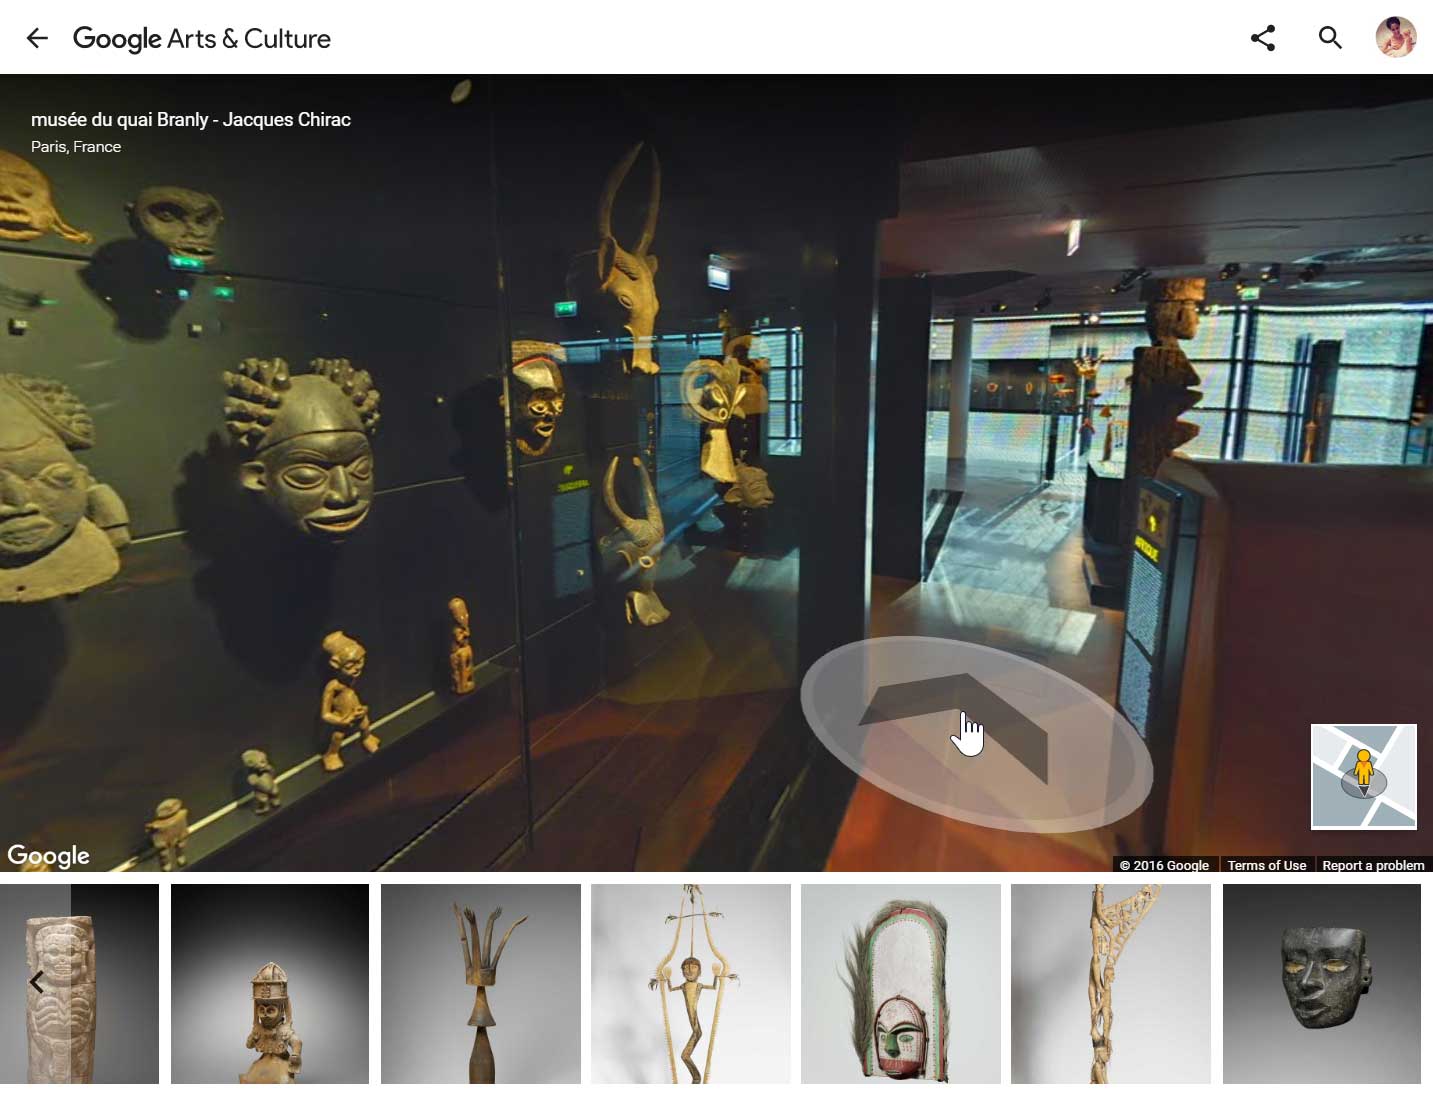 Google Art Project museum view